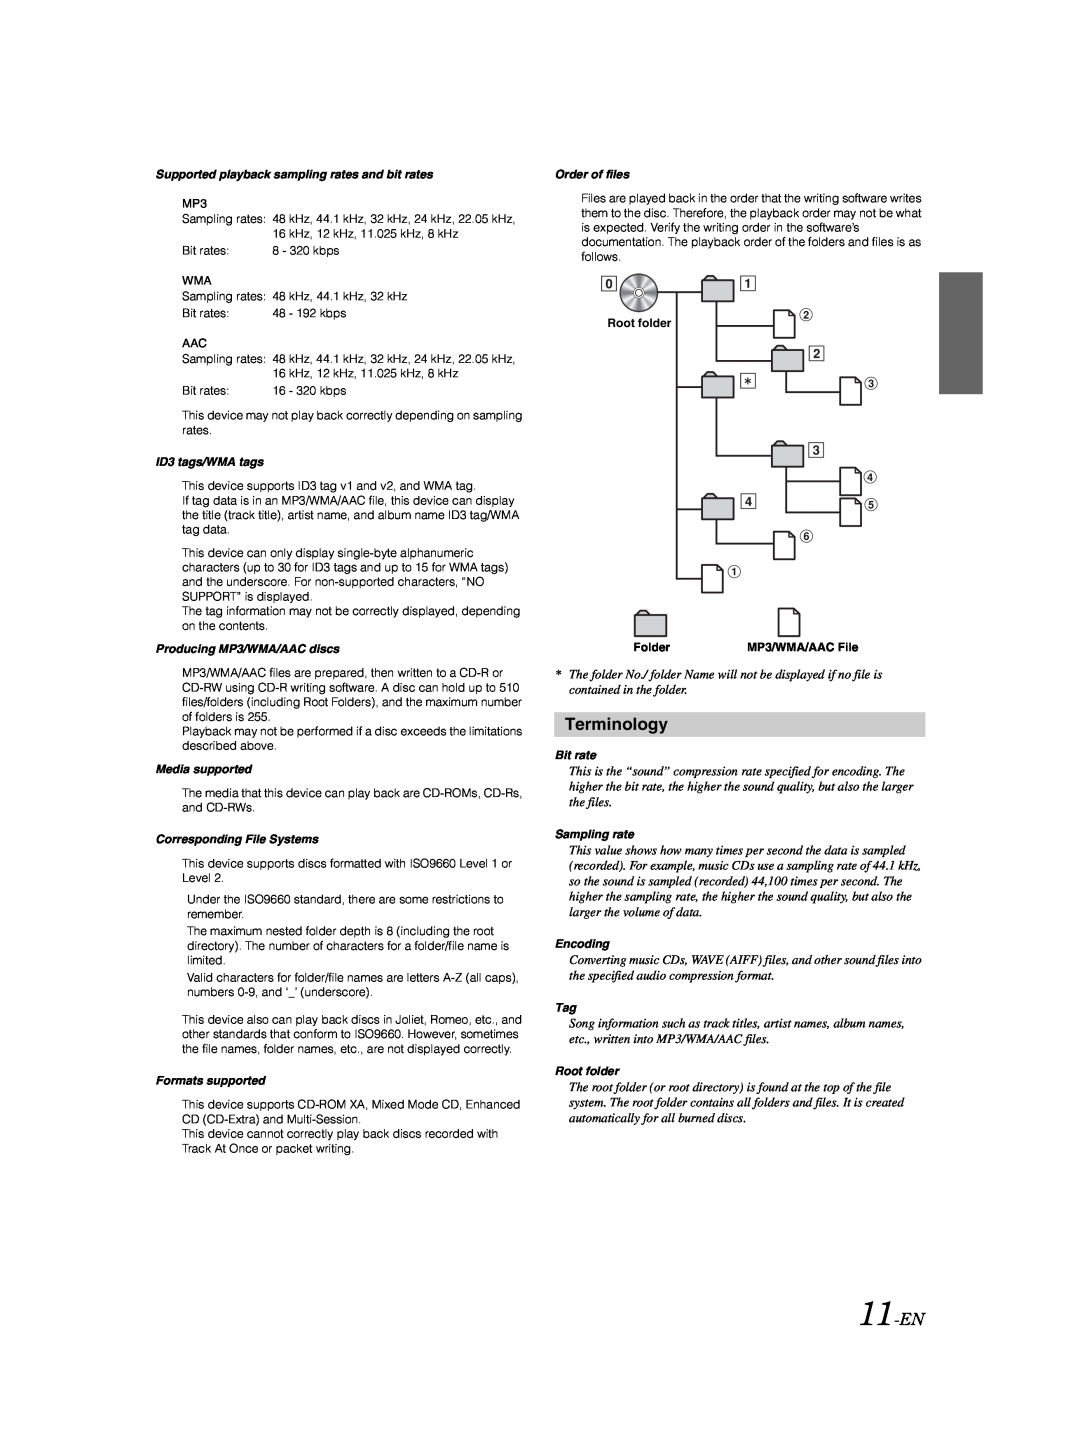 Alpine CDE-9873 owner manual Terminology, 11-EN 